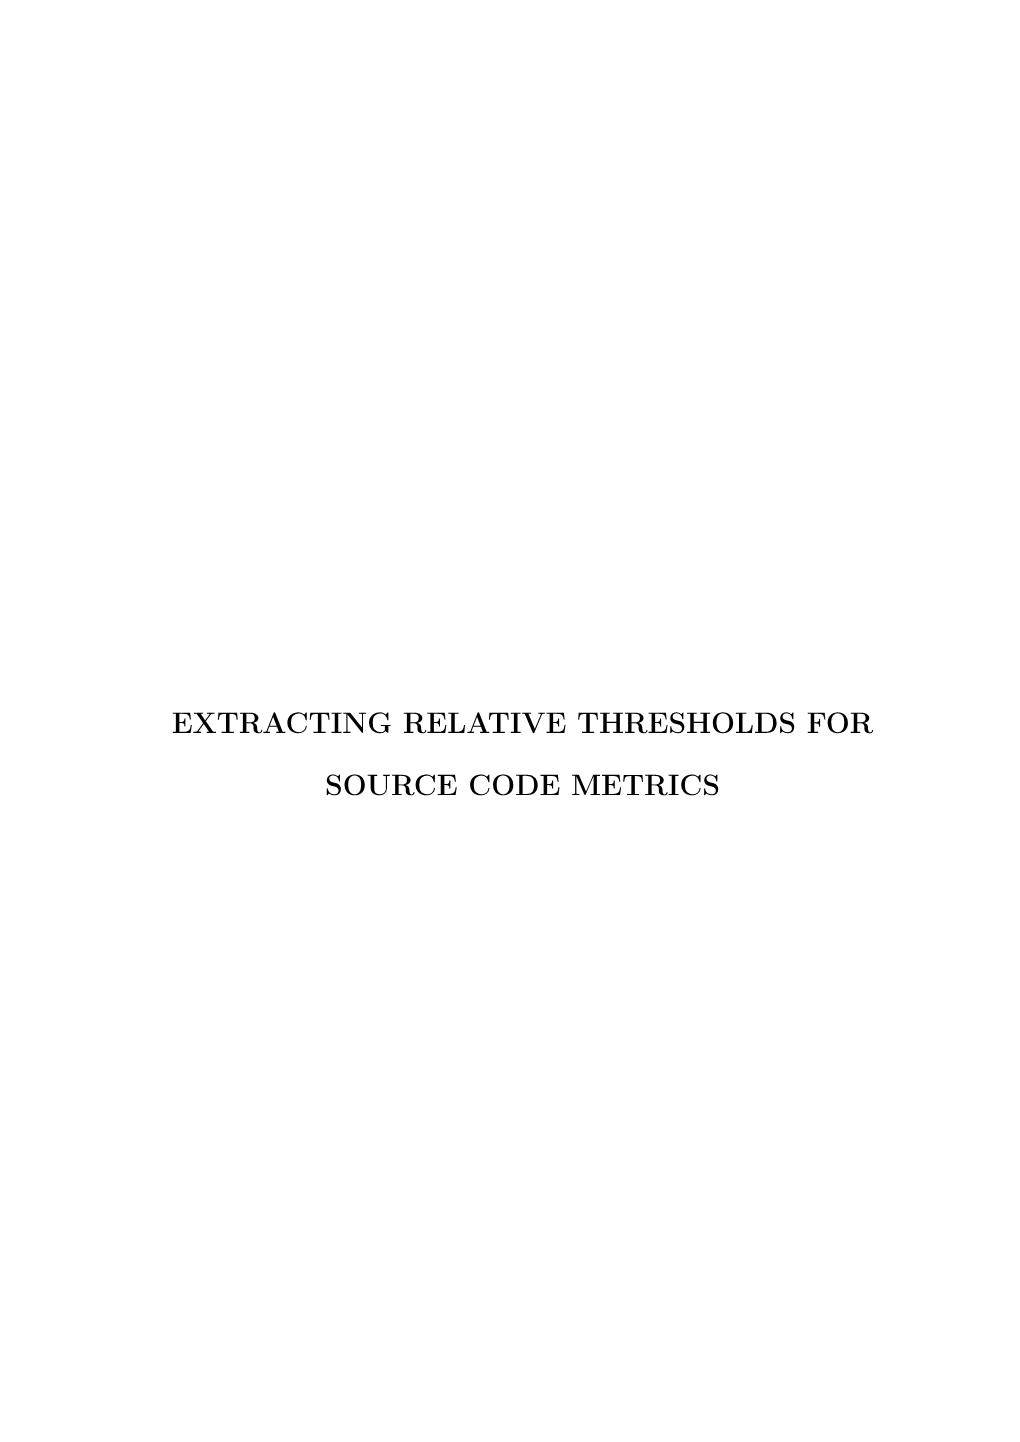 Extracting Relative Thresholds for Source Code Metrics / Paloma Maira De Oliveira